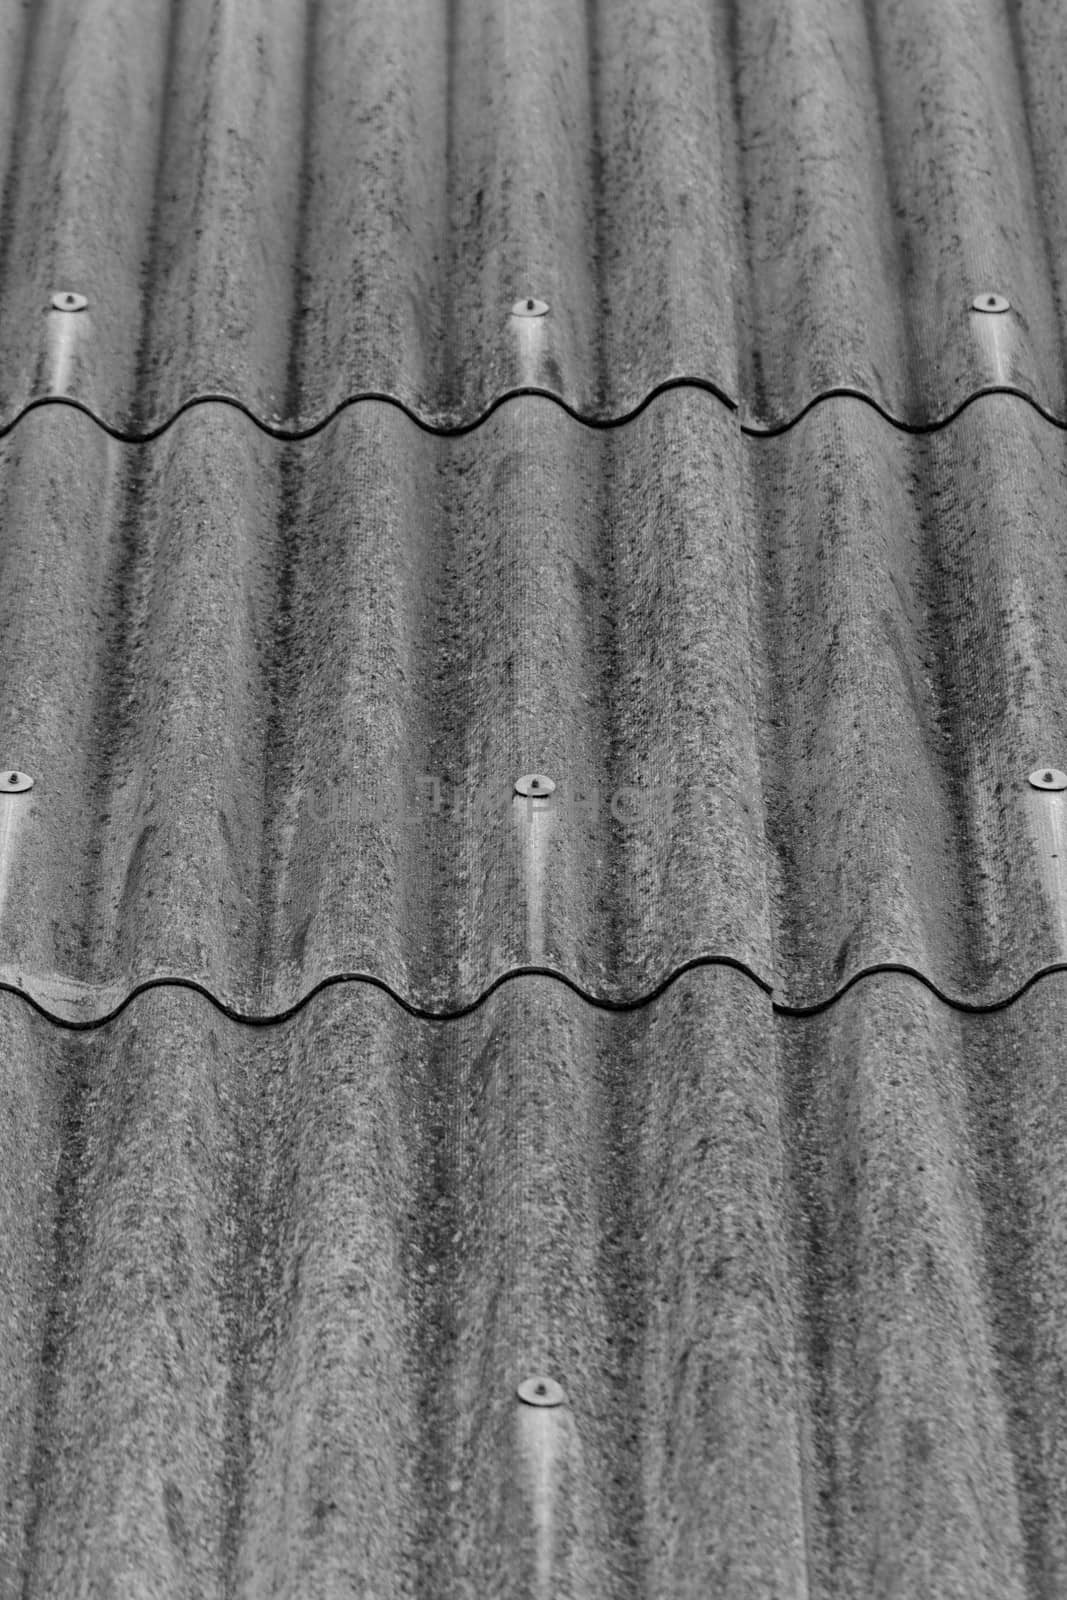 gray corrugated slate roof by NagyDodo